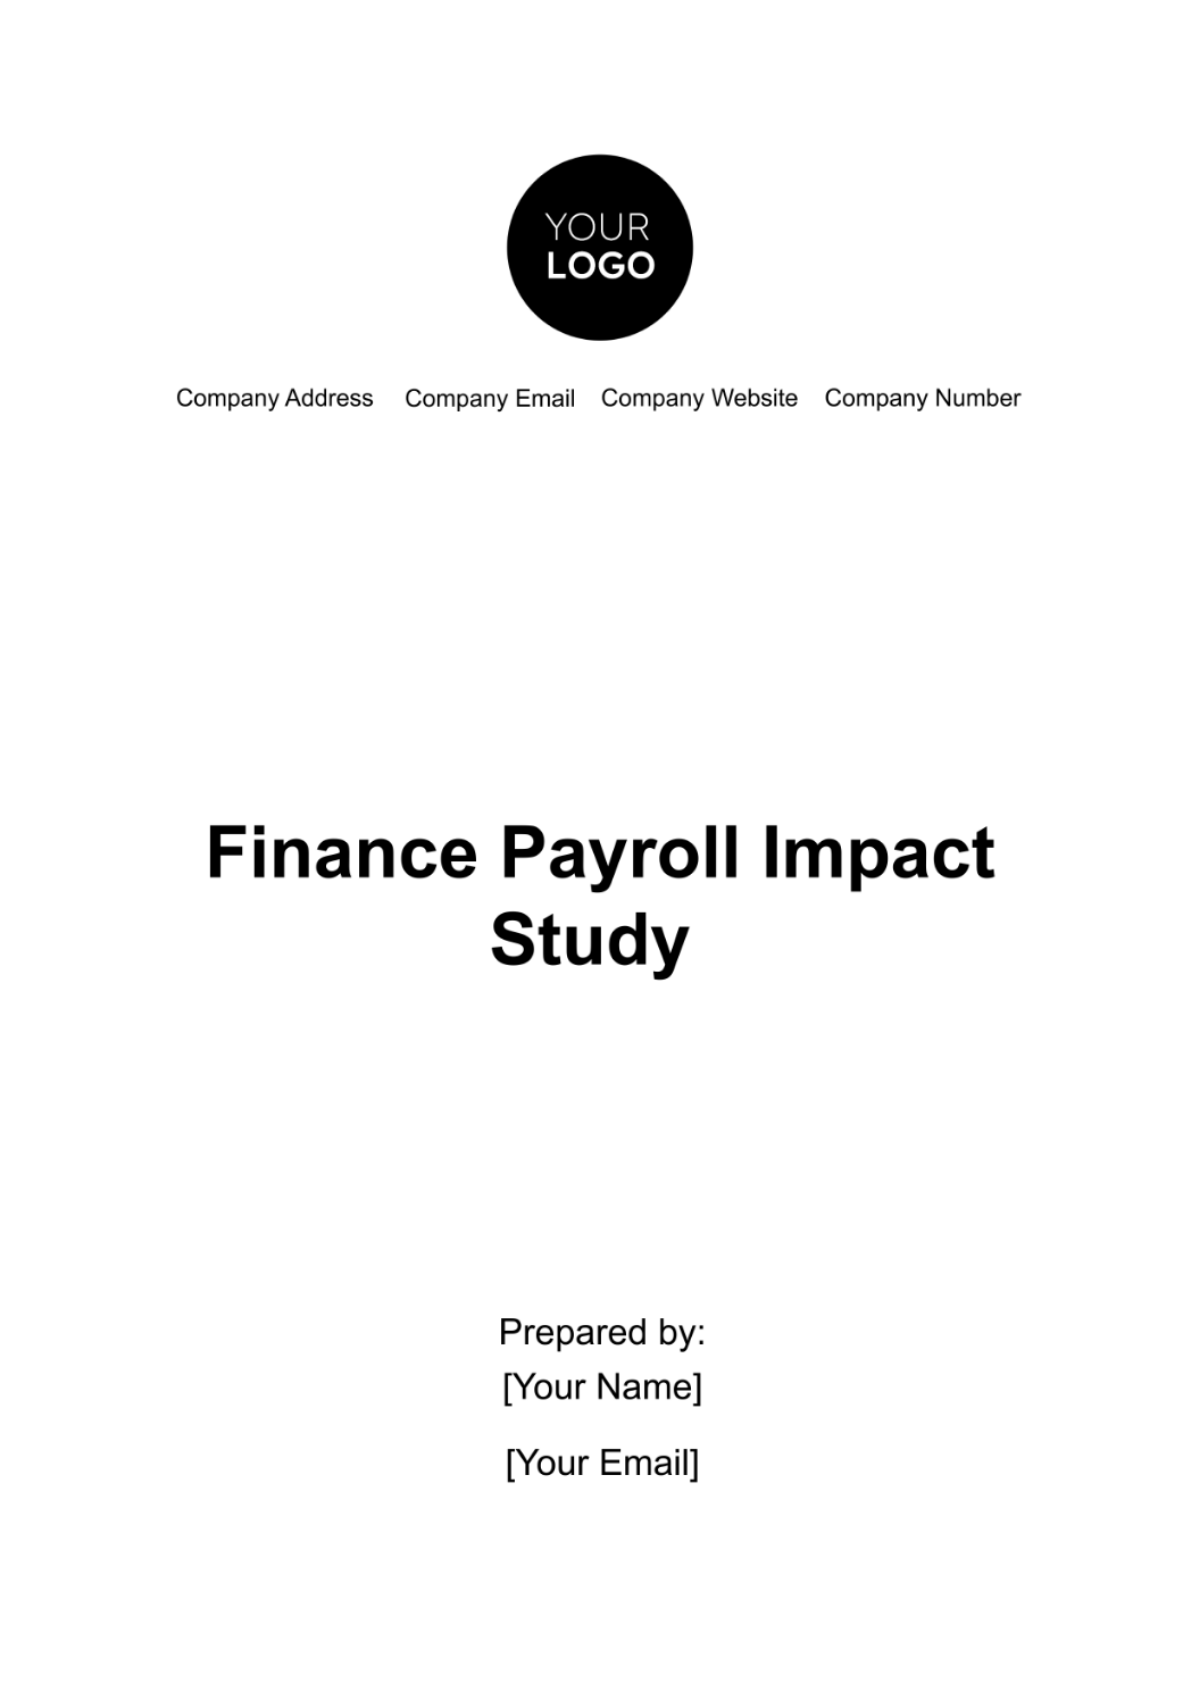 Finance Payroll Impact Study Template